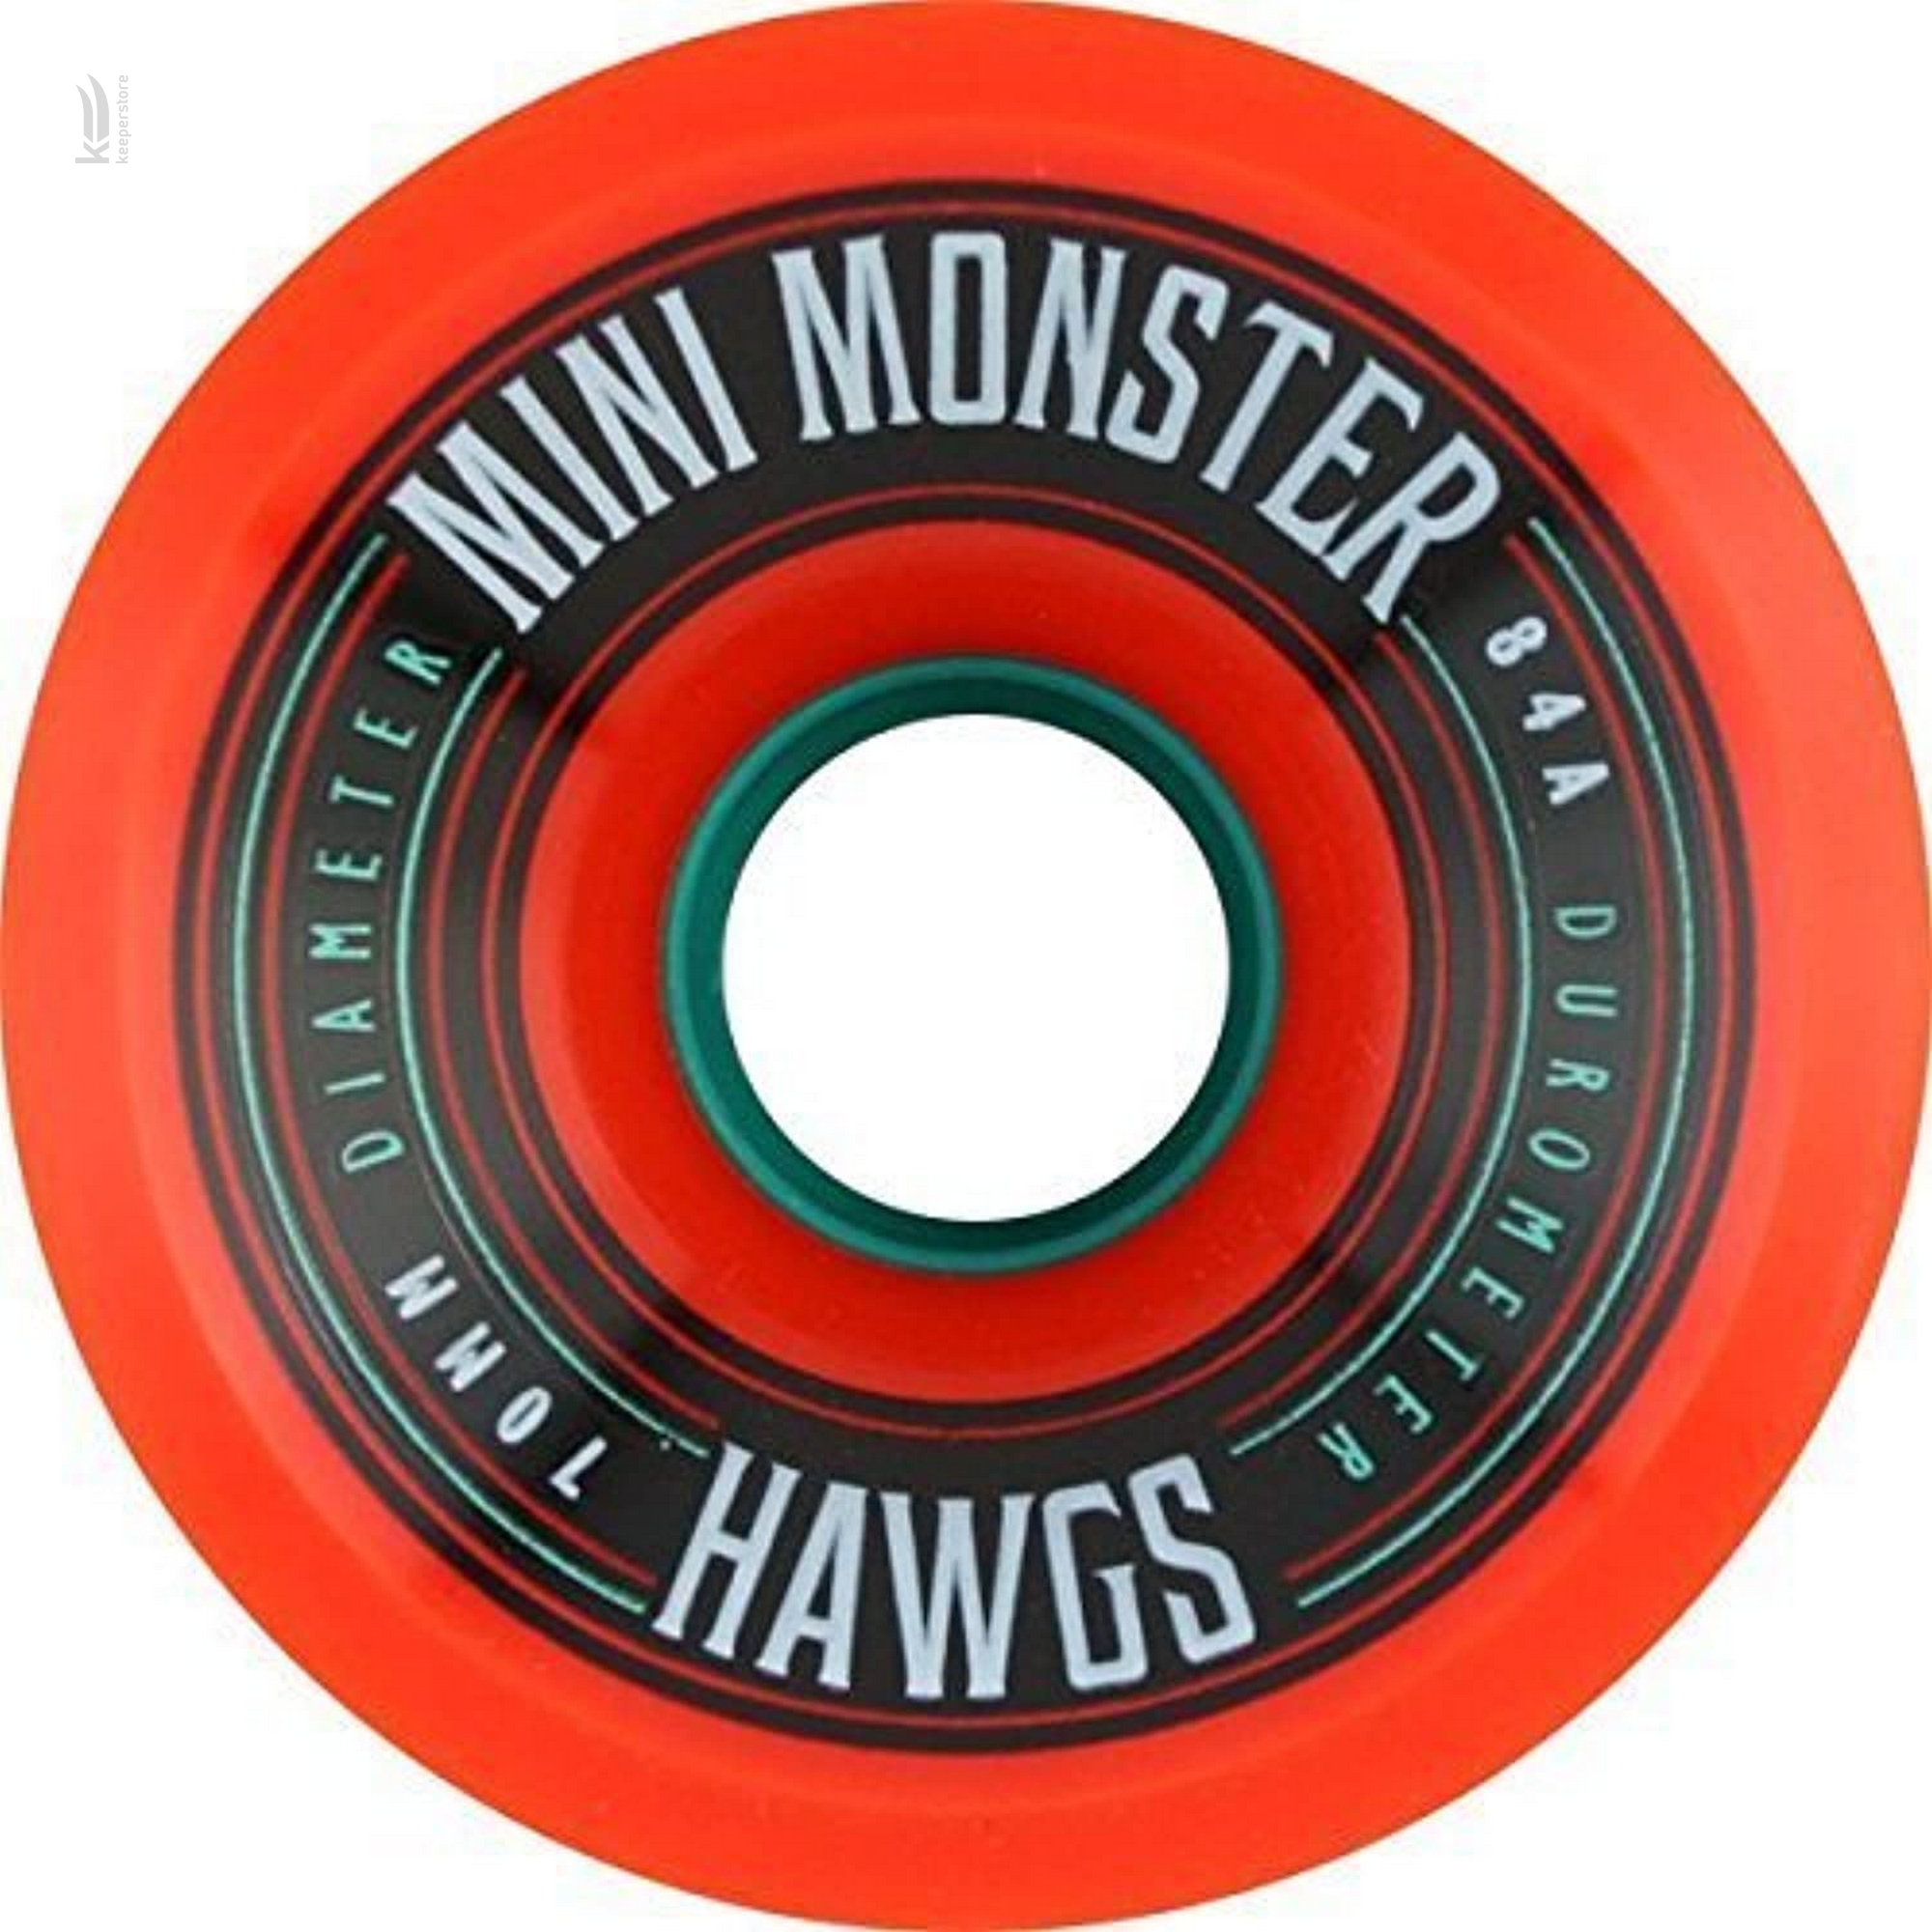 Landyachtz Mini Monster Hawgs 70Mm - Orange 84A